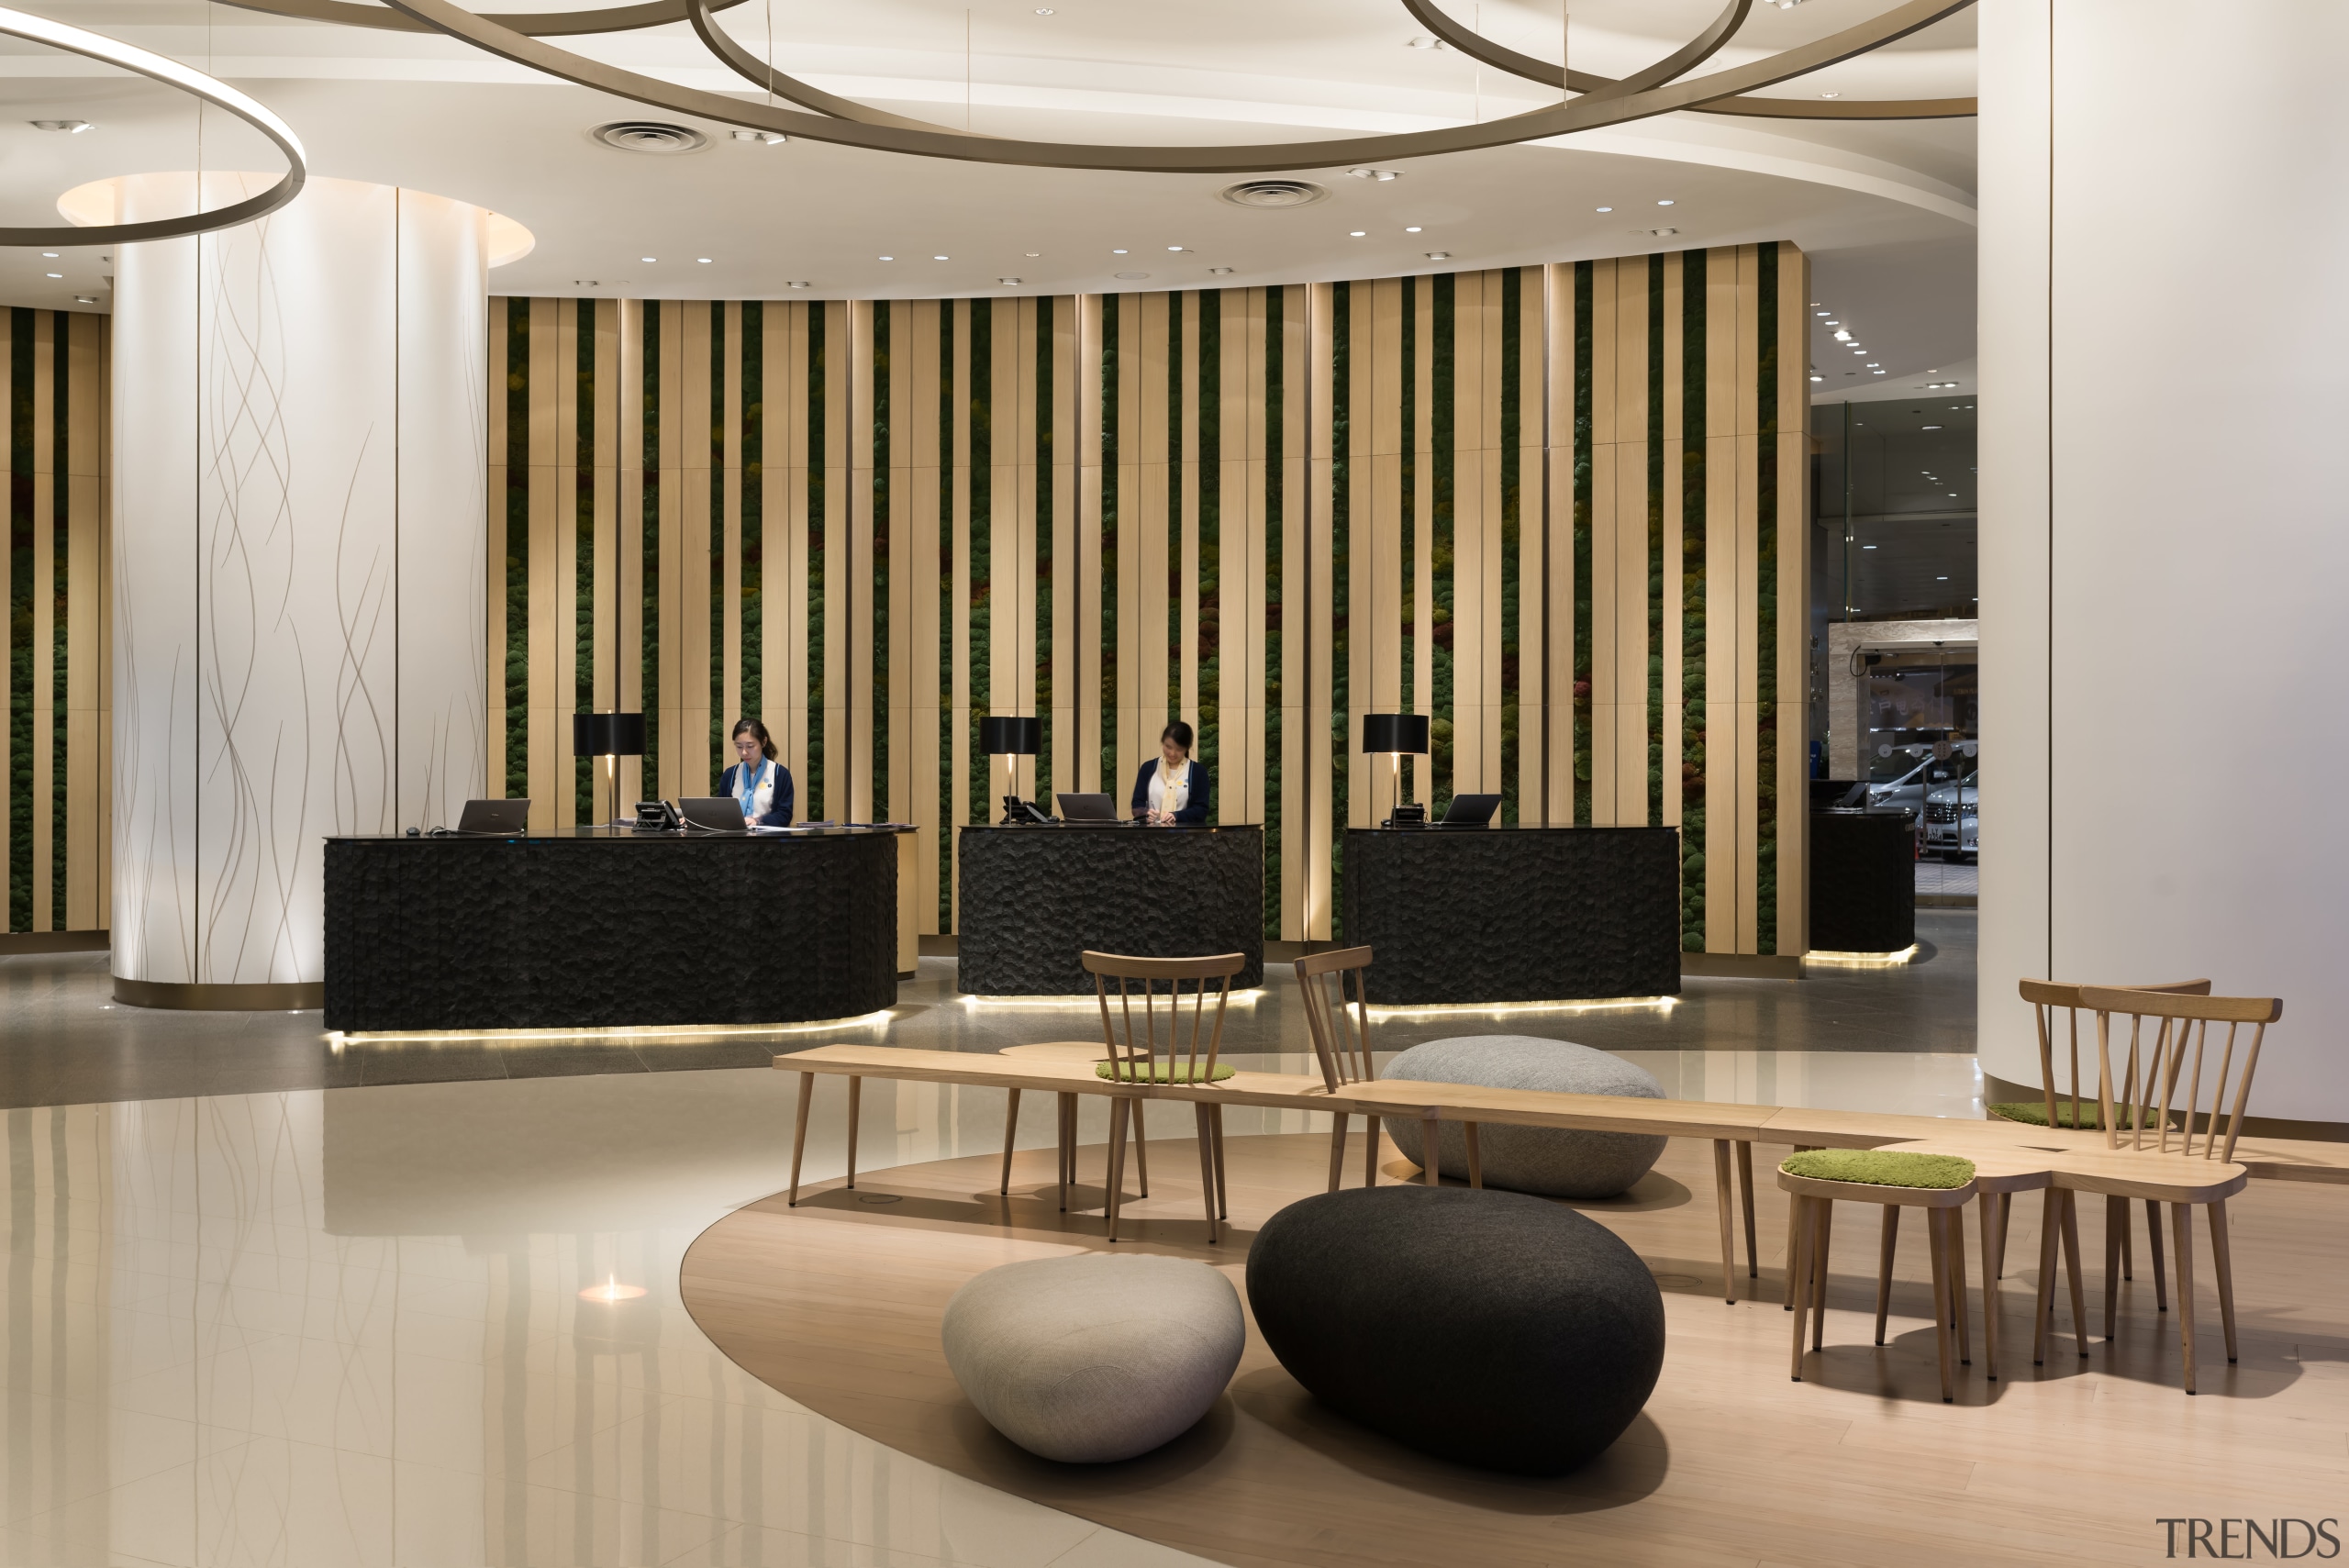 The lobby at the Novotel Century Hong Kong, floor, flooring, furniture, interior design, lobby, Hotel, Novotel